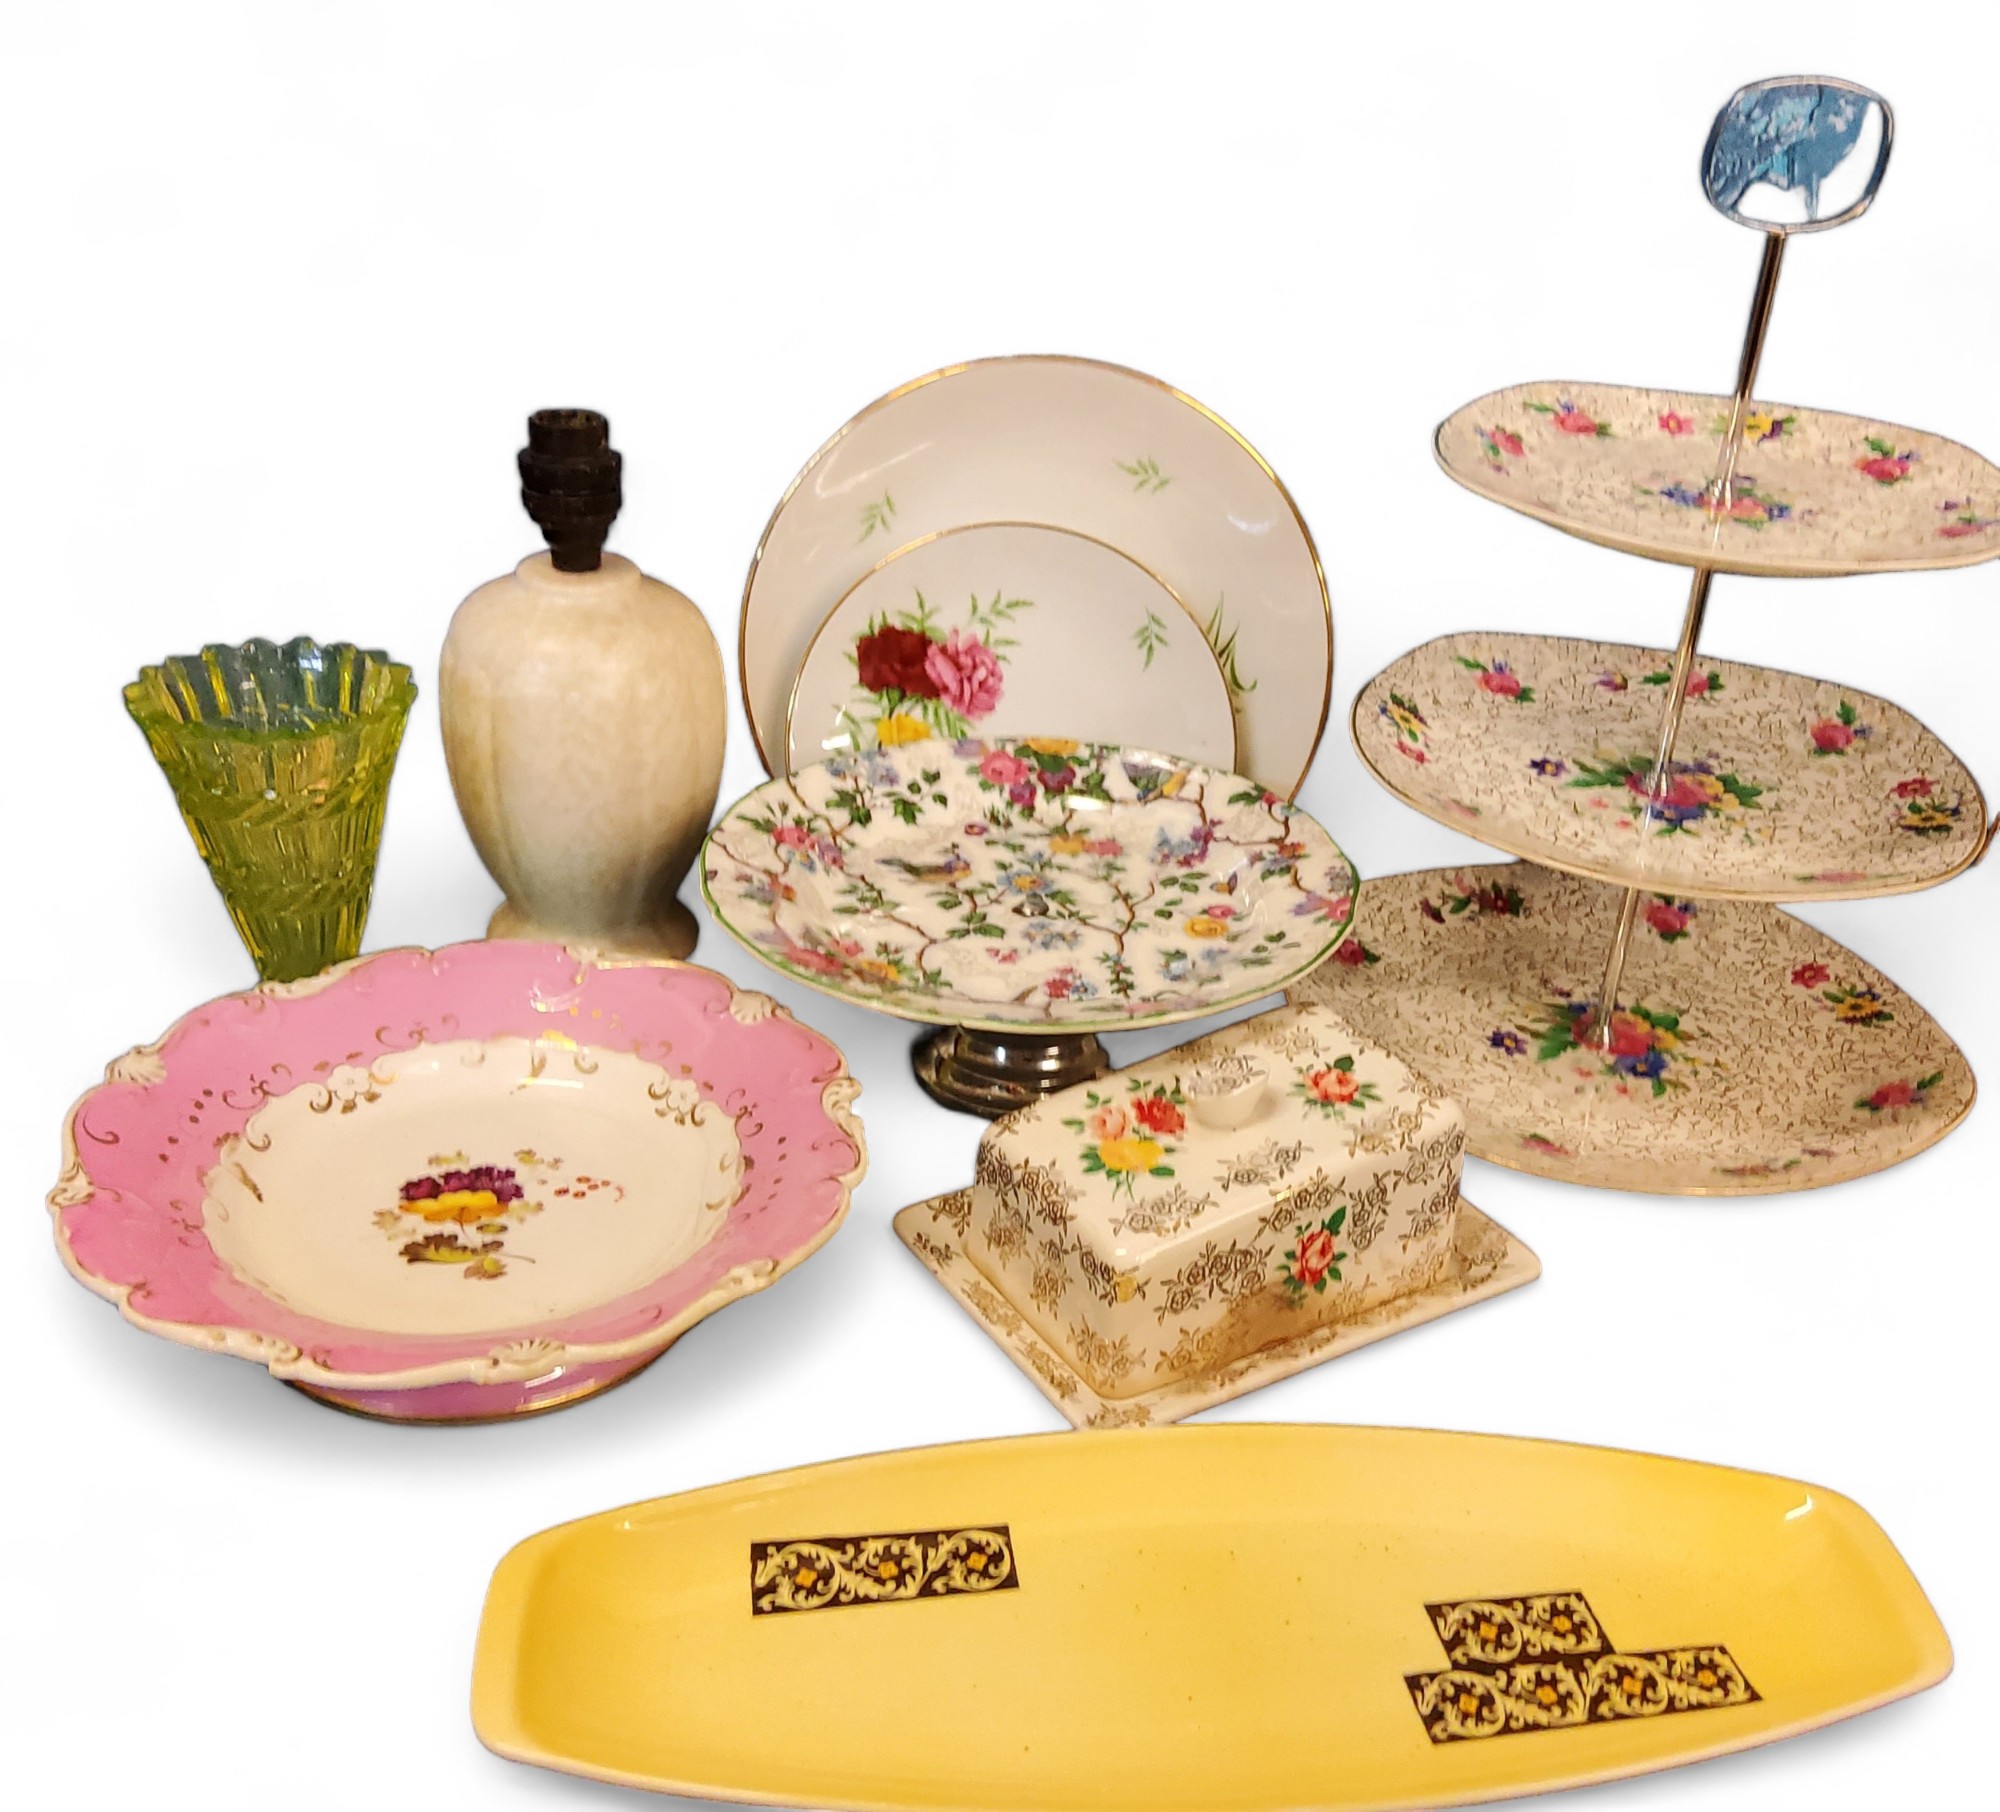 Ceramics - a Midwinter Stylecraft Fashion shape three tier cake stand;  Carlton Ware sandwich plate;